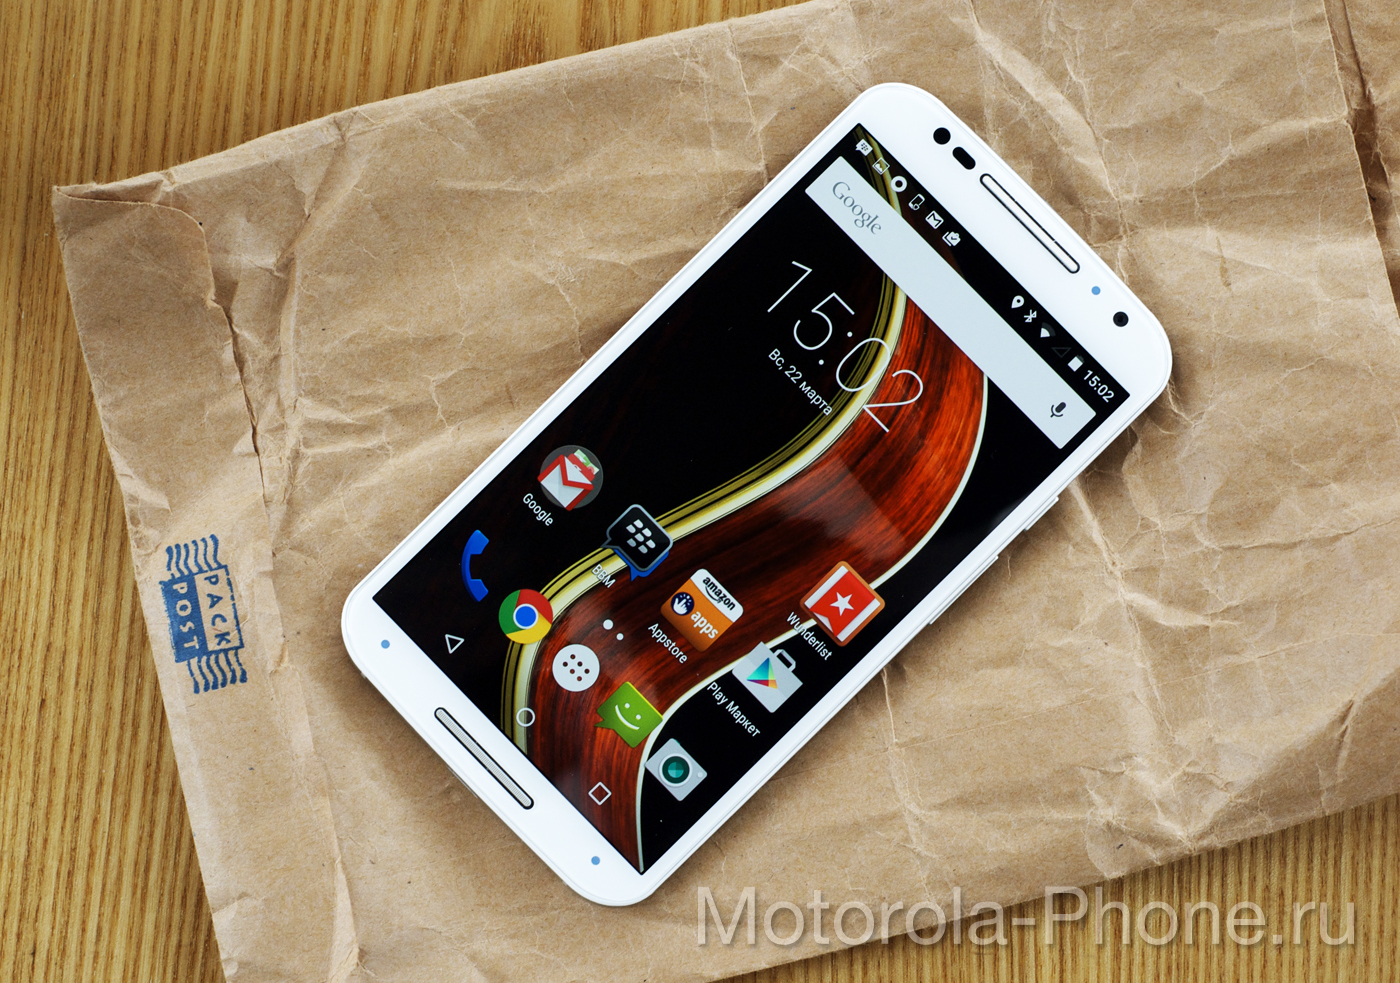 Motorola Moto X Phone